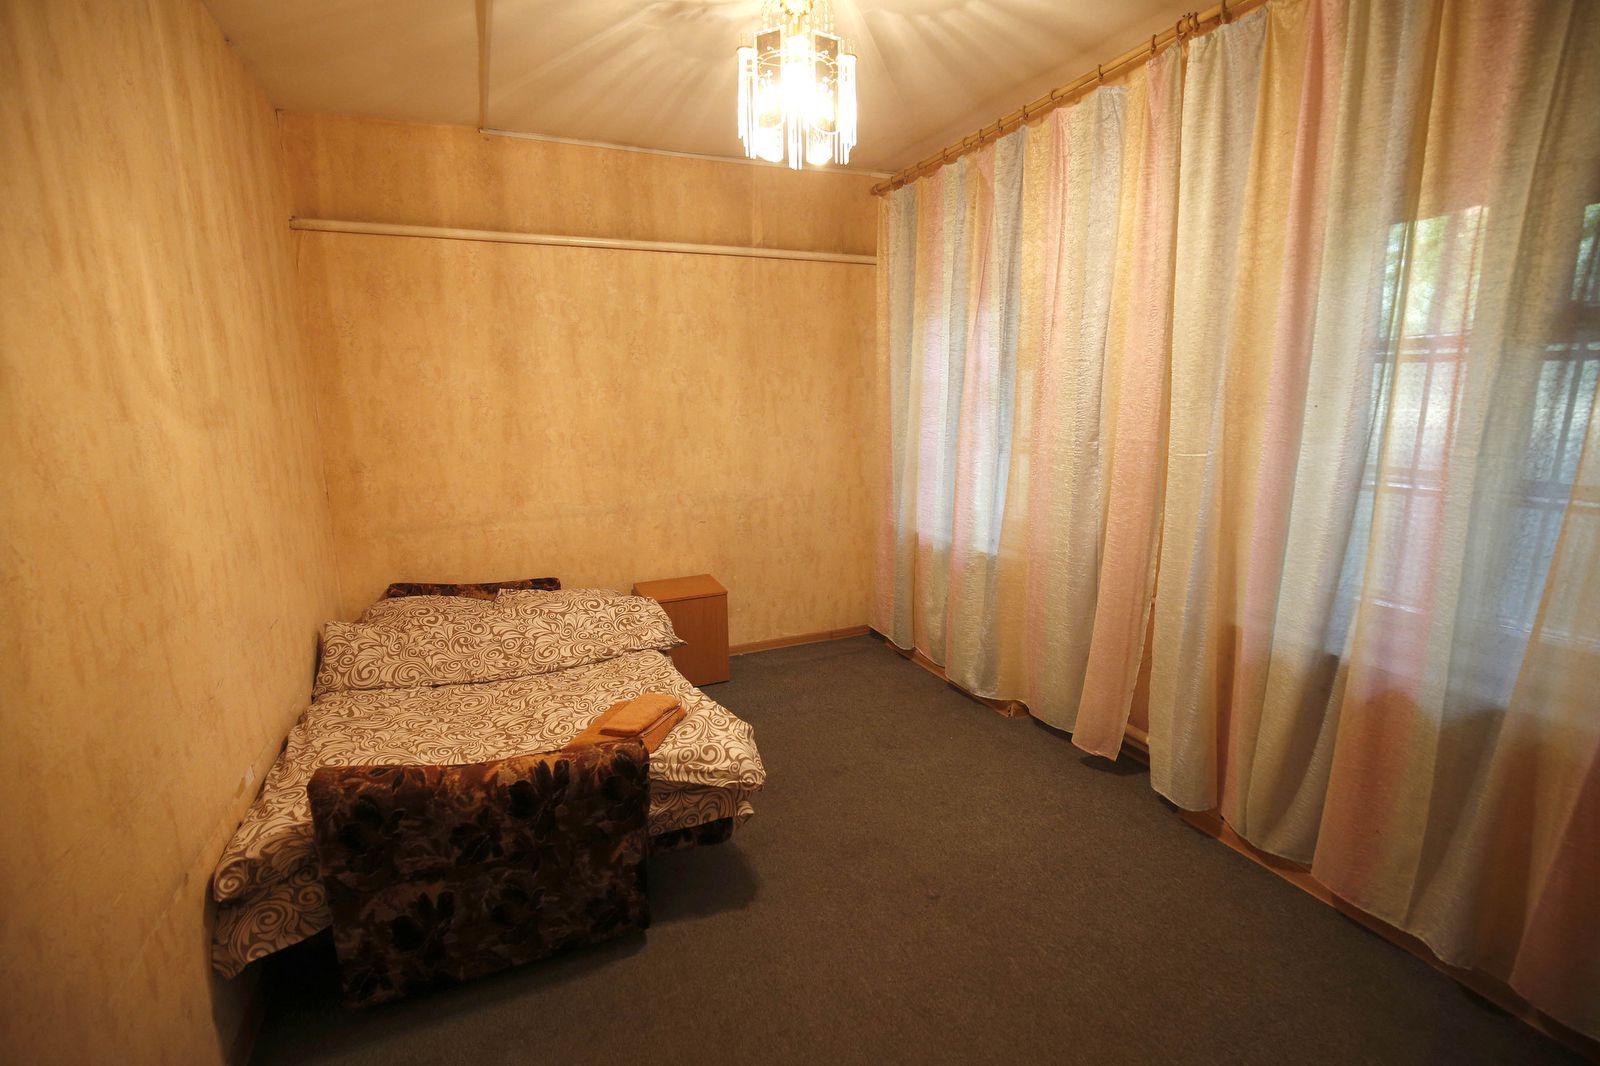 My gulag room